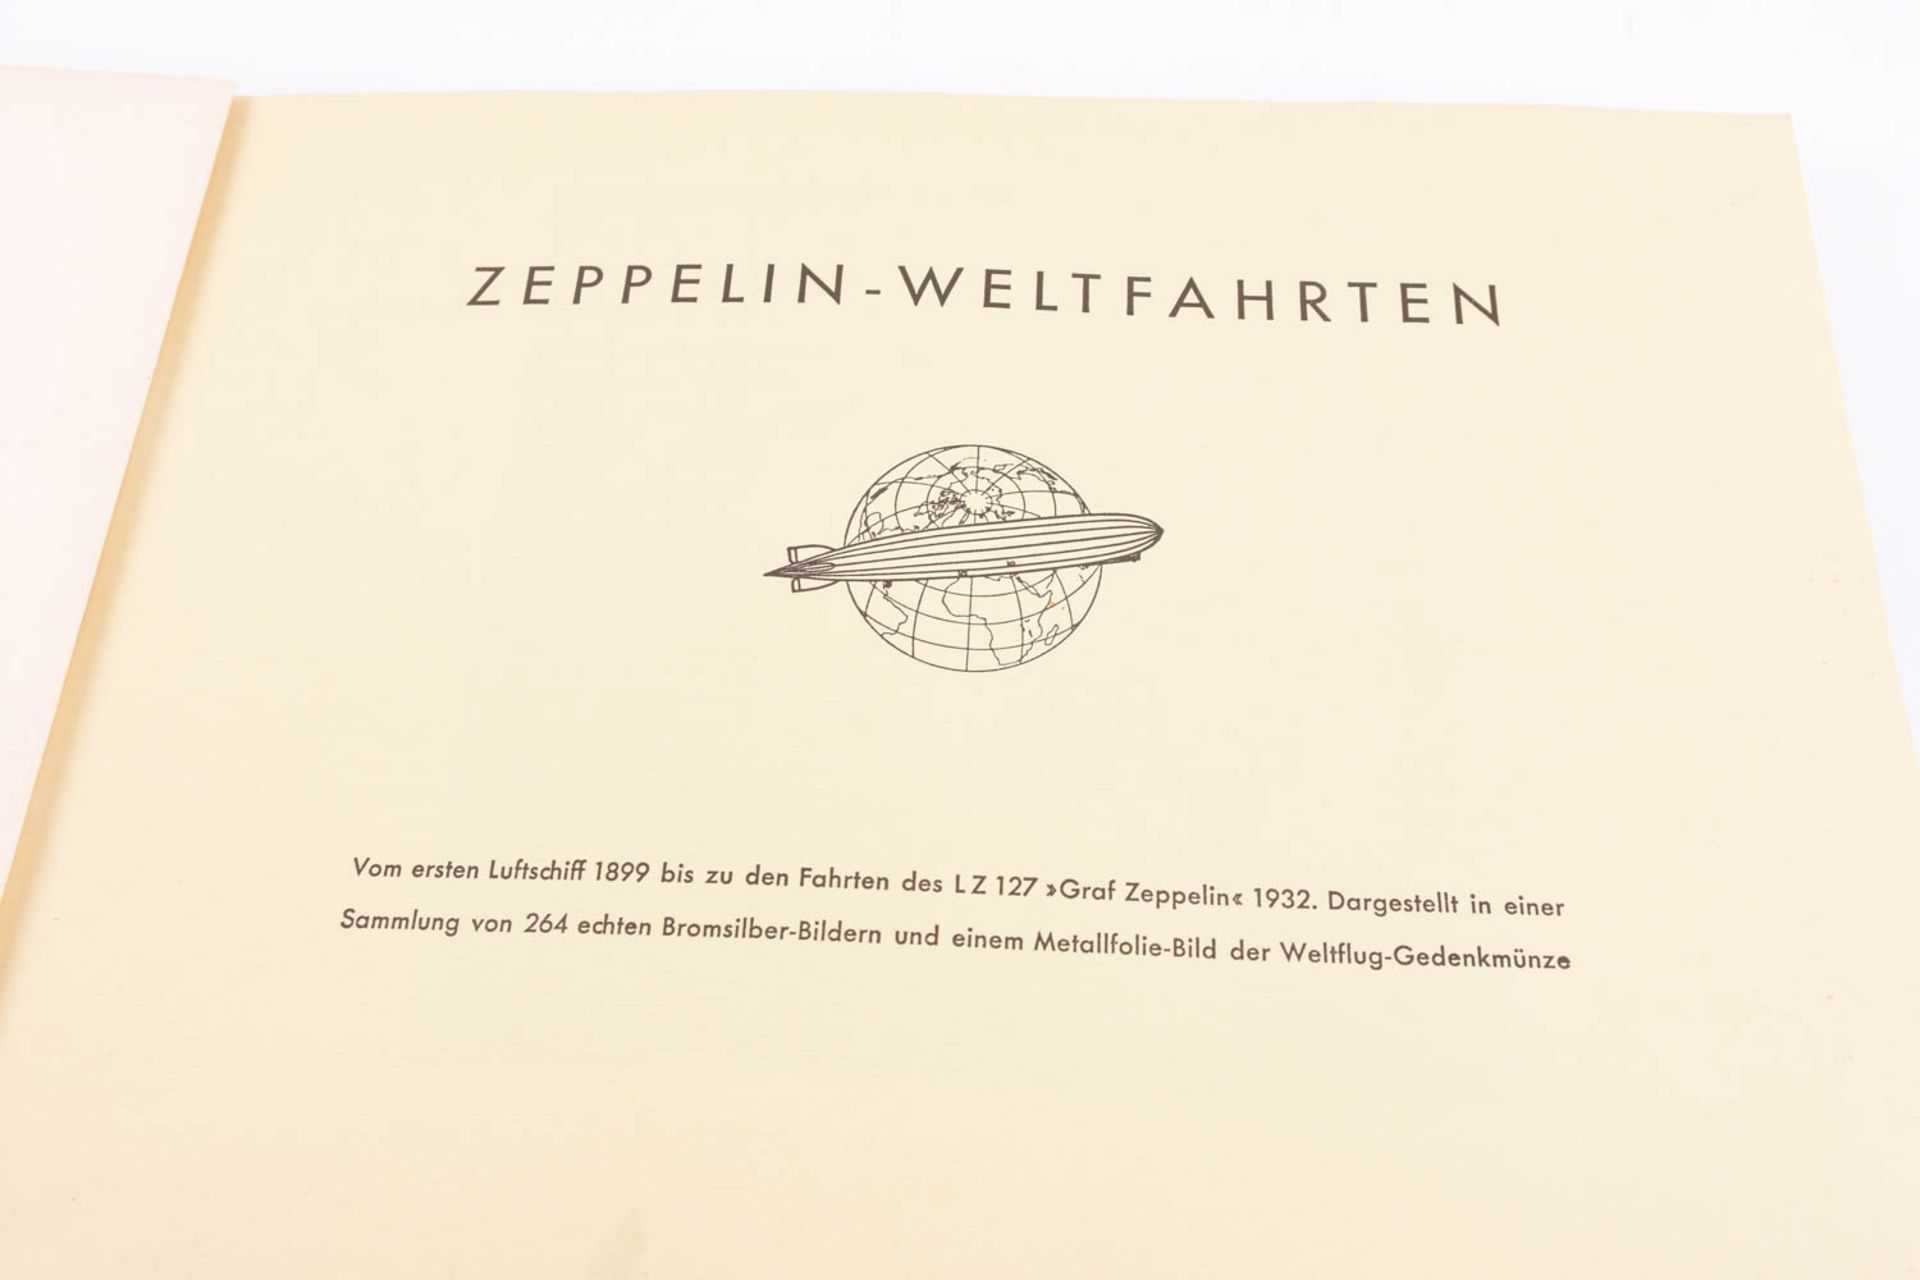 Zeppelin-Weltfahrten Buch, 1932 - Image 2 of 9